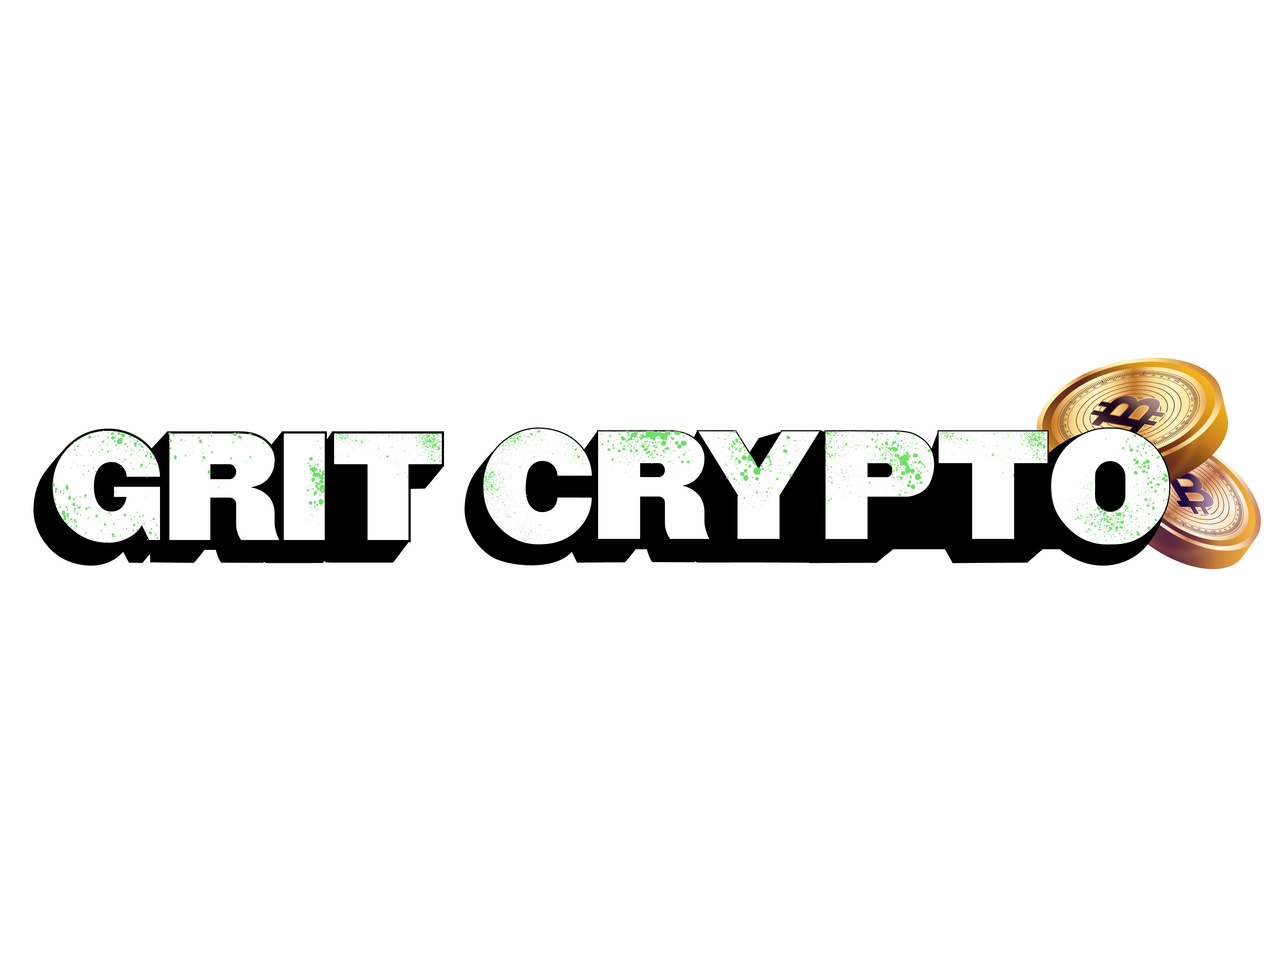 GritCRYPTO